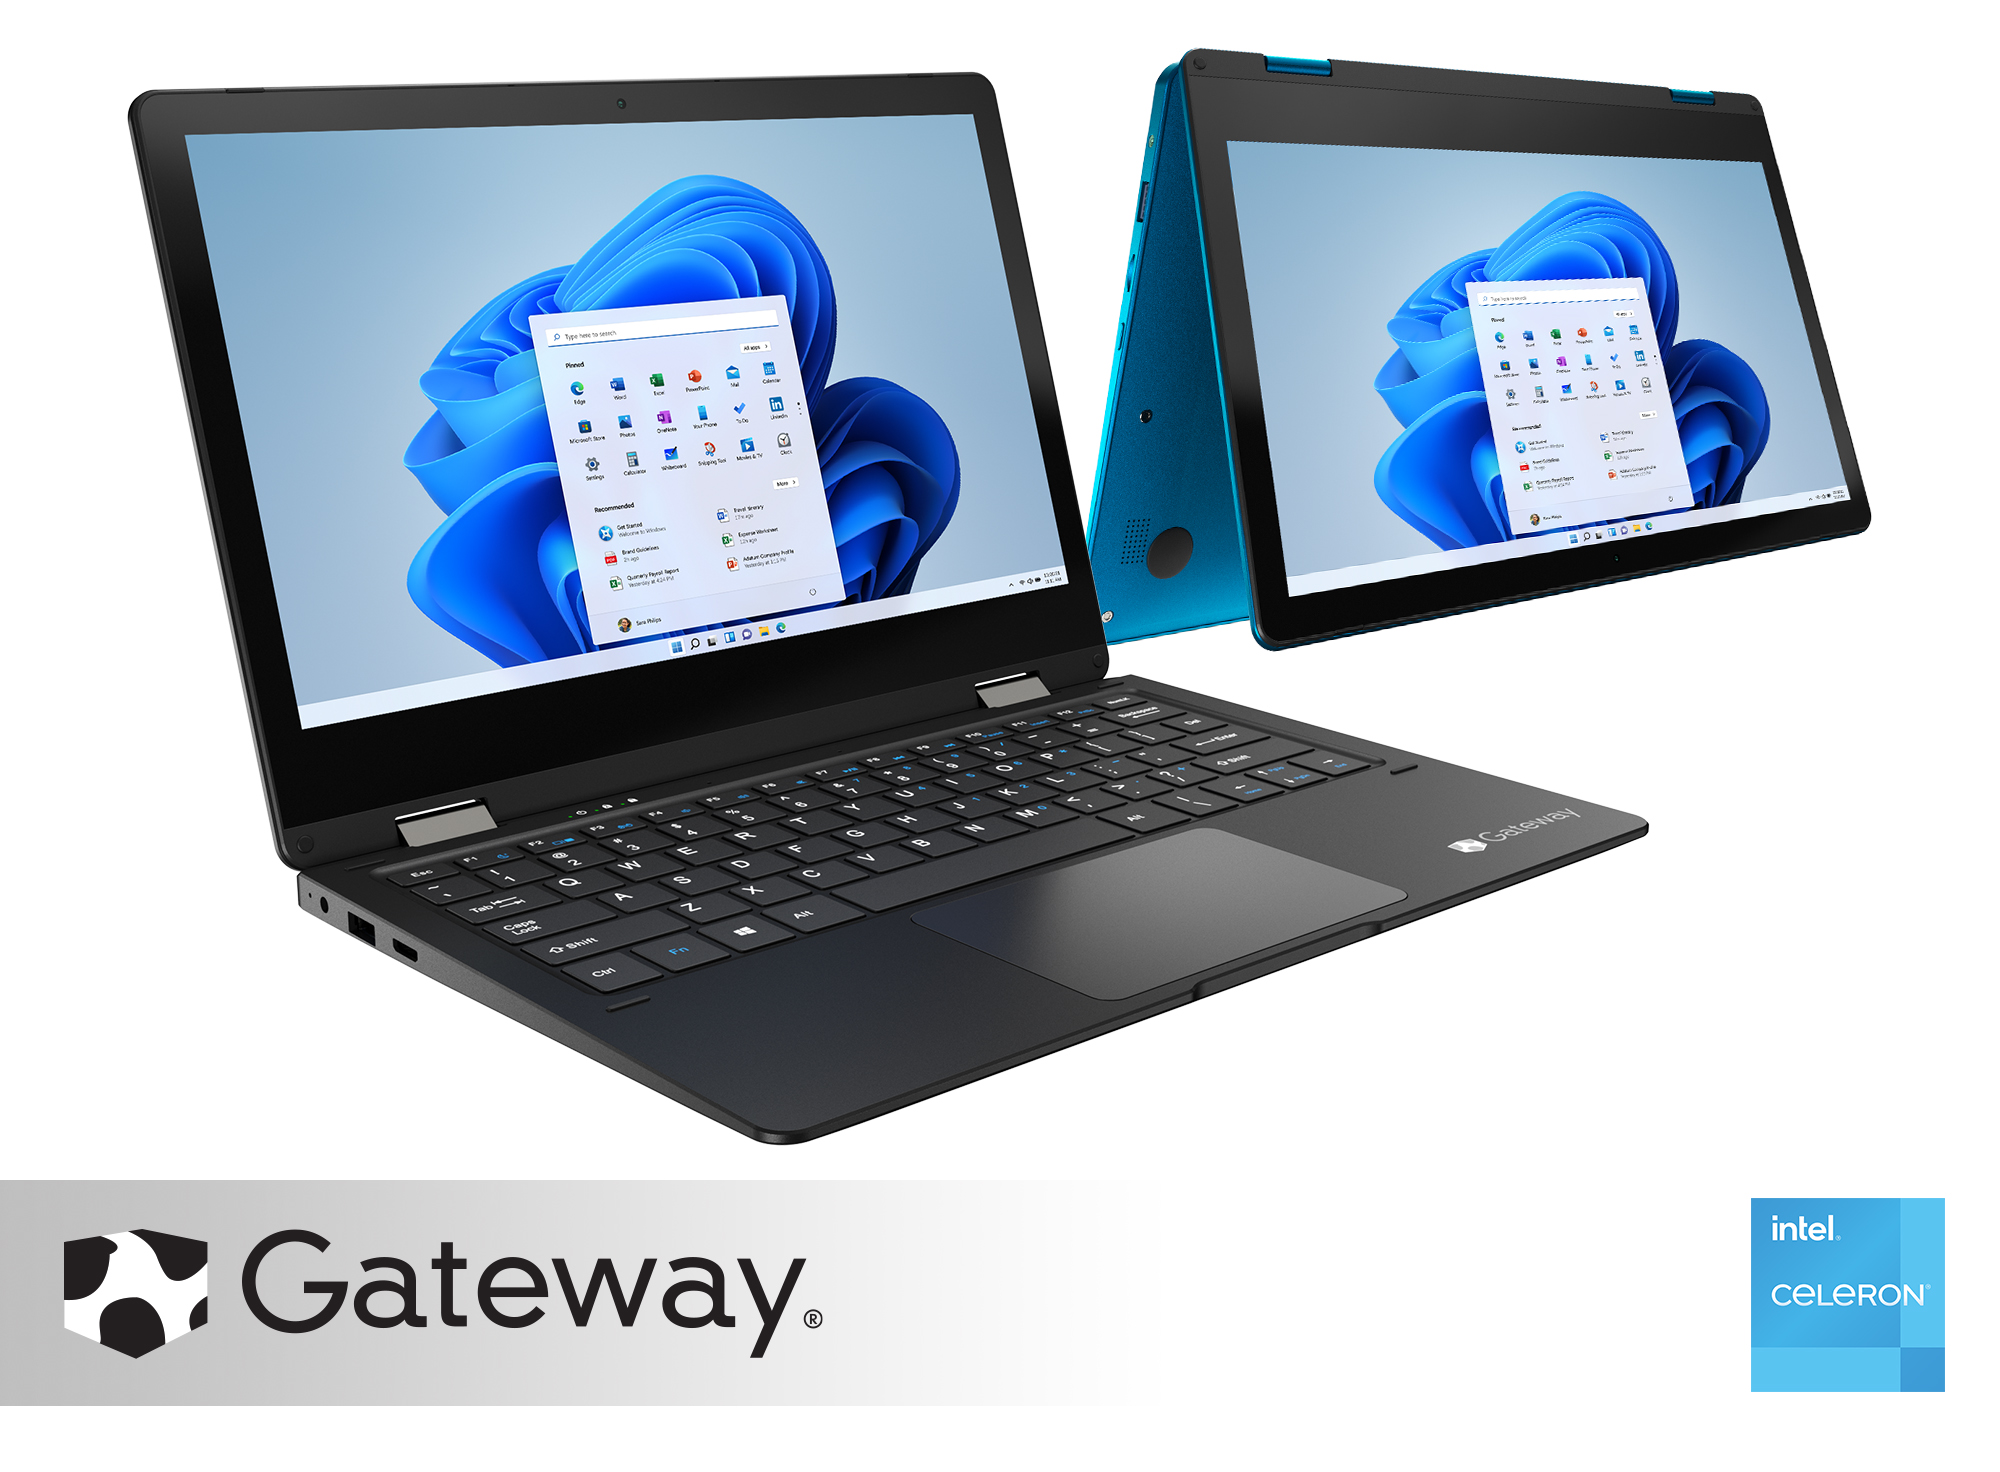 Gateway Notebook 11.6" Touchscreen 2-in-1s Laptop, Intel Celeron N4020, 4GB RAM, 64GB HD, Windows 10 Home, Black, GWTC116-2BK - image 1 of 7